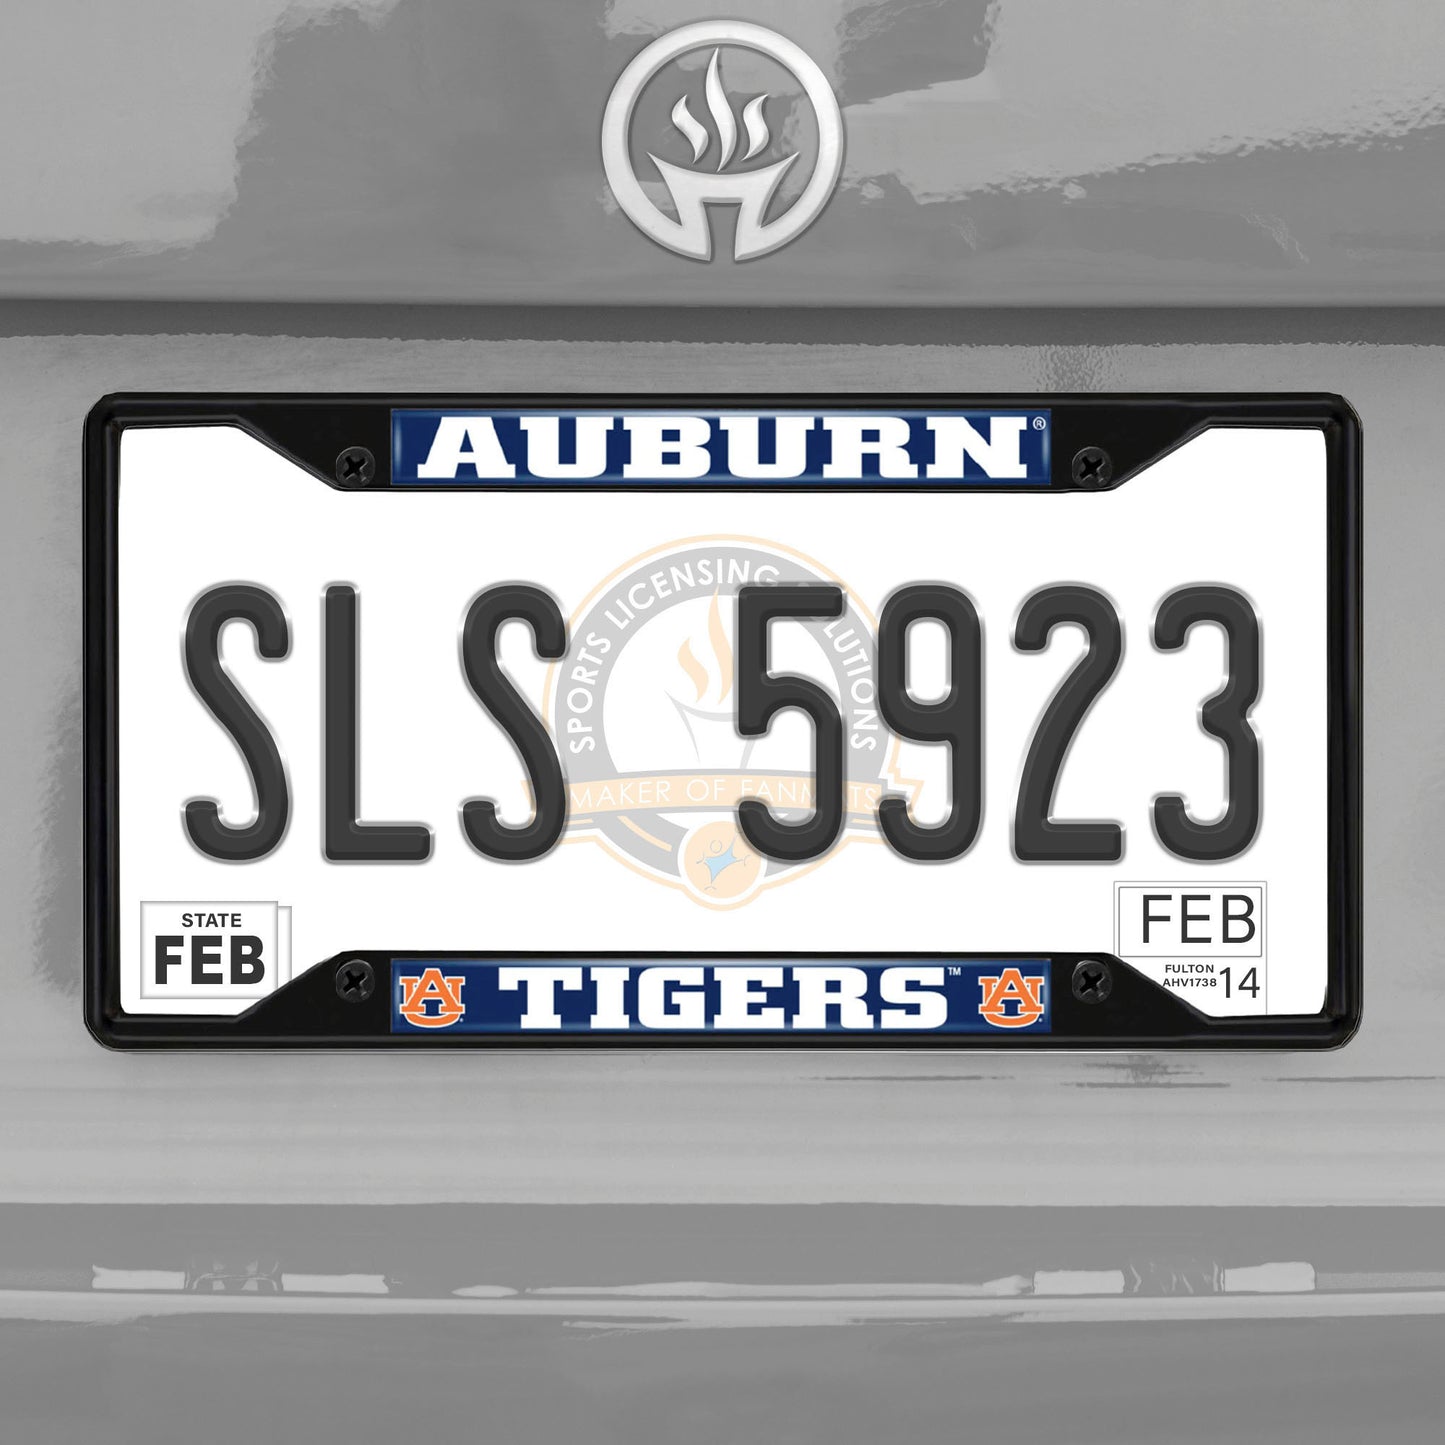 Auburn Tigers Metal License Plate Frame Black Finish